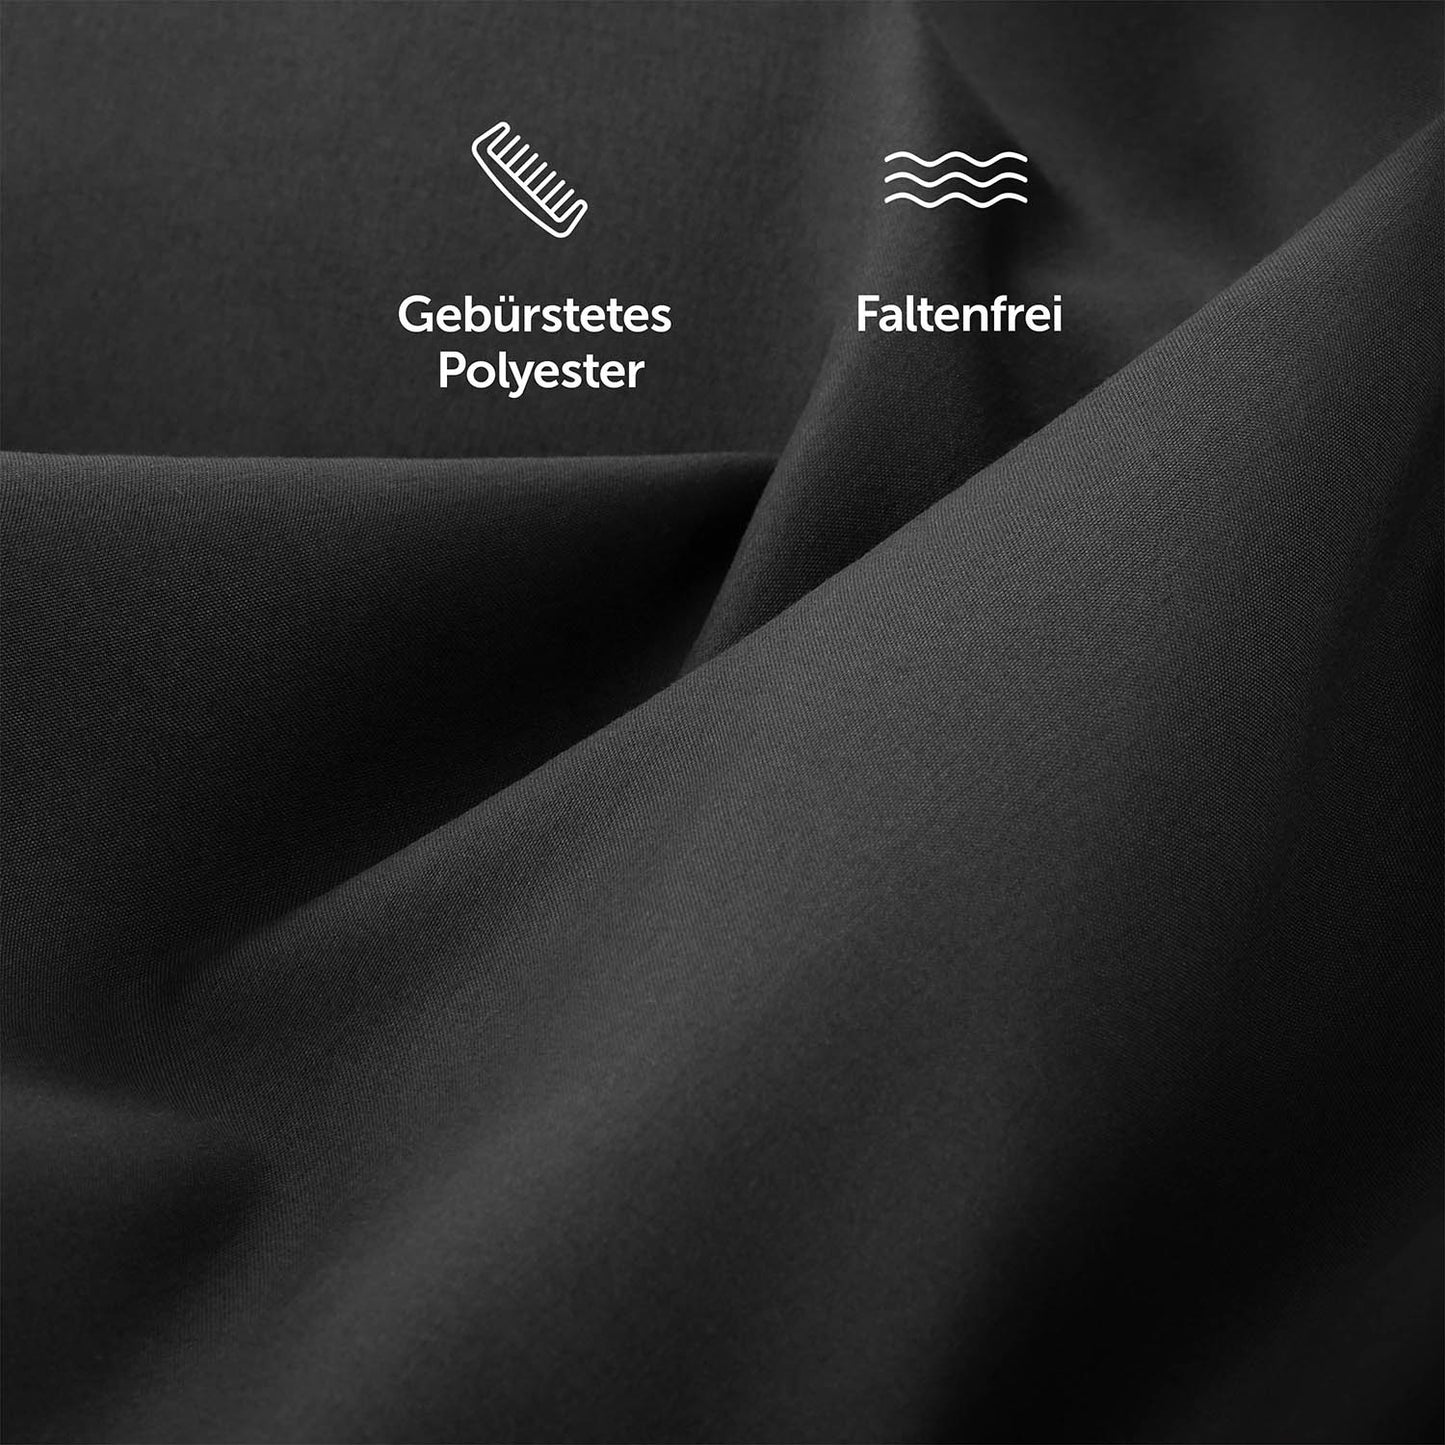 Kissenbezug aus Mikrofaser mit Reißverschluss im 2er Set, Oekotex Zertifiziert